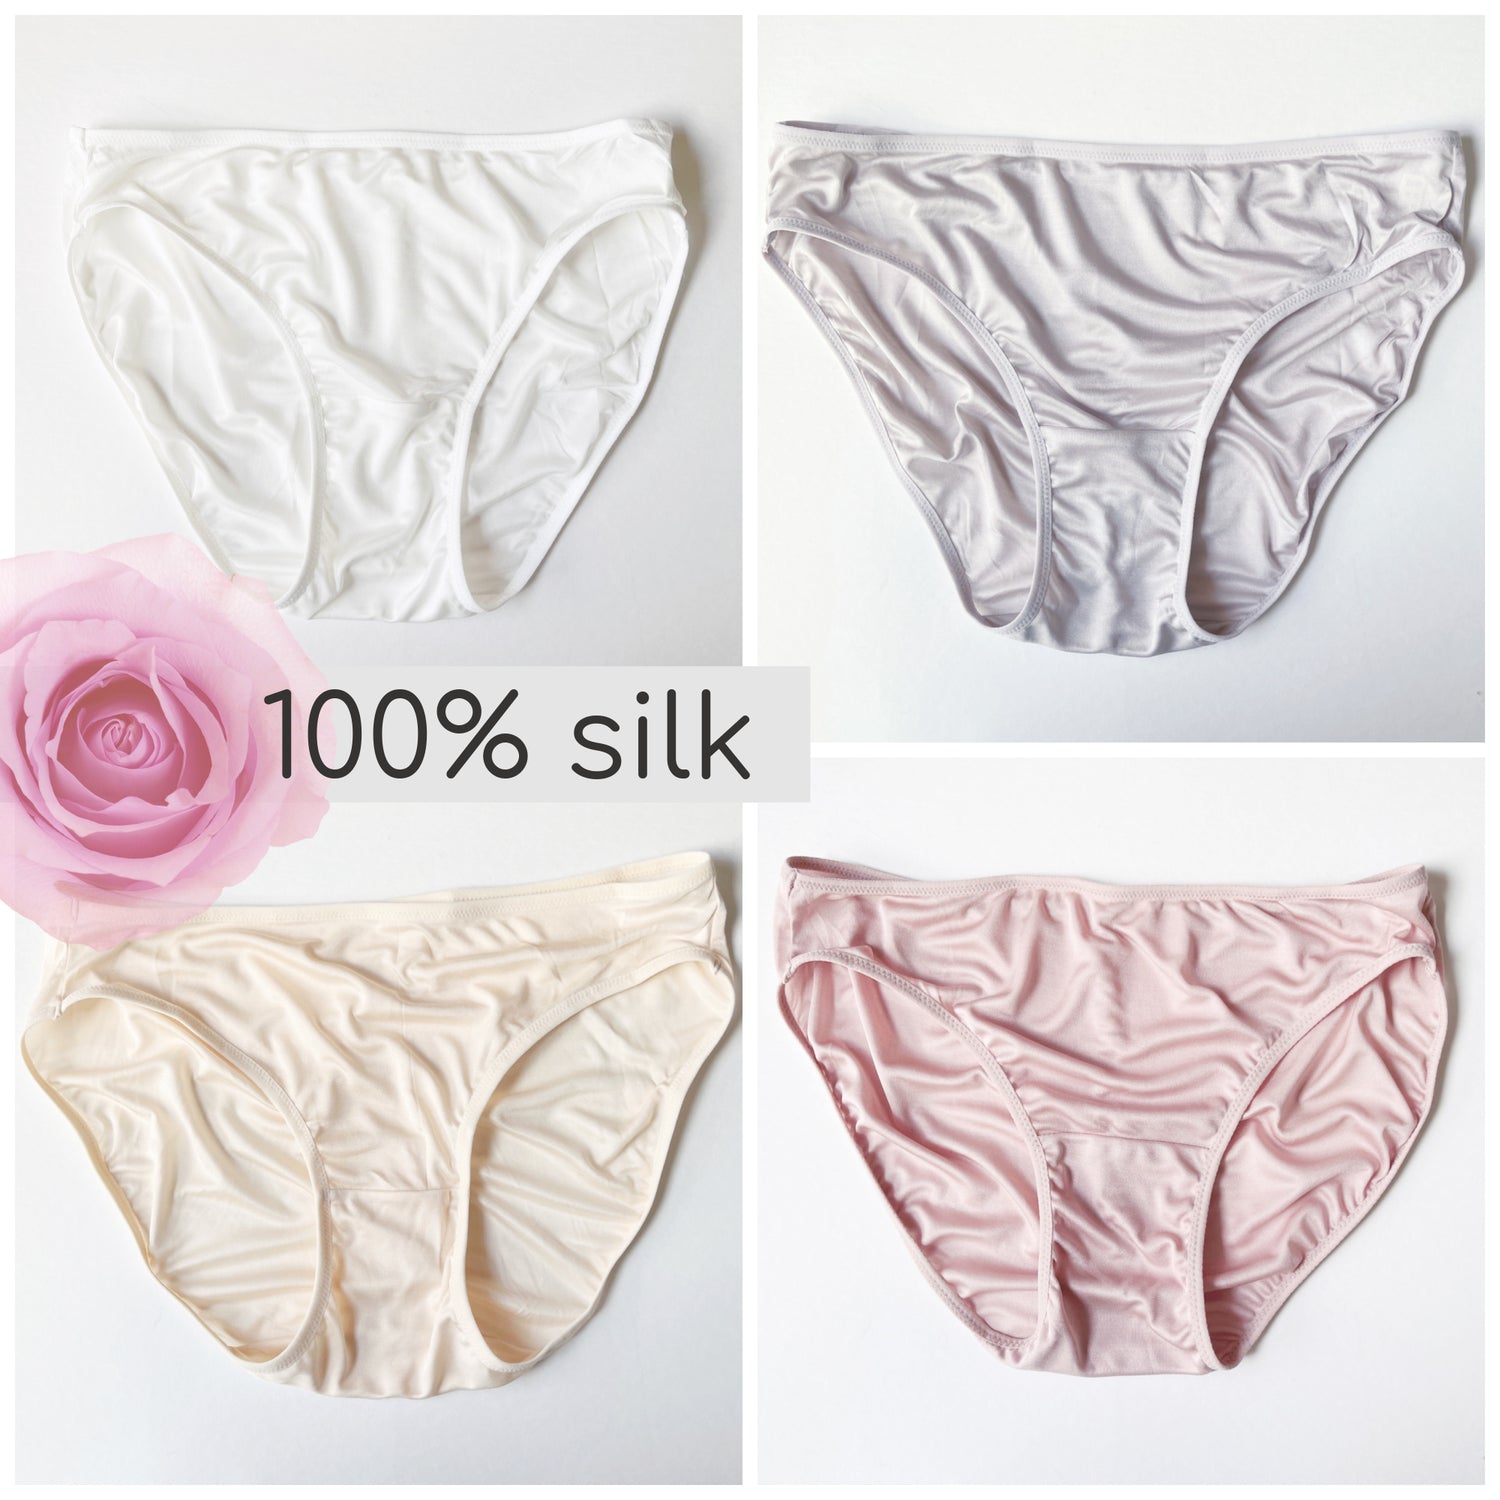 Silk Panty Pics